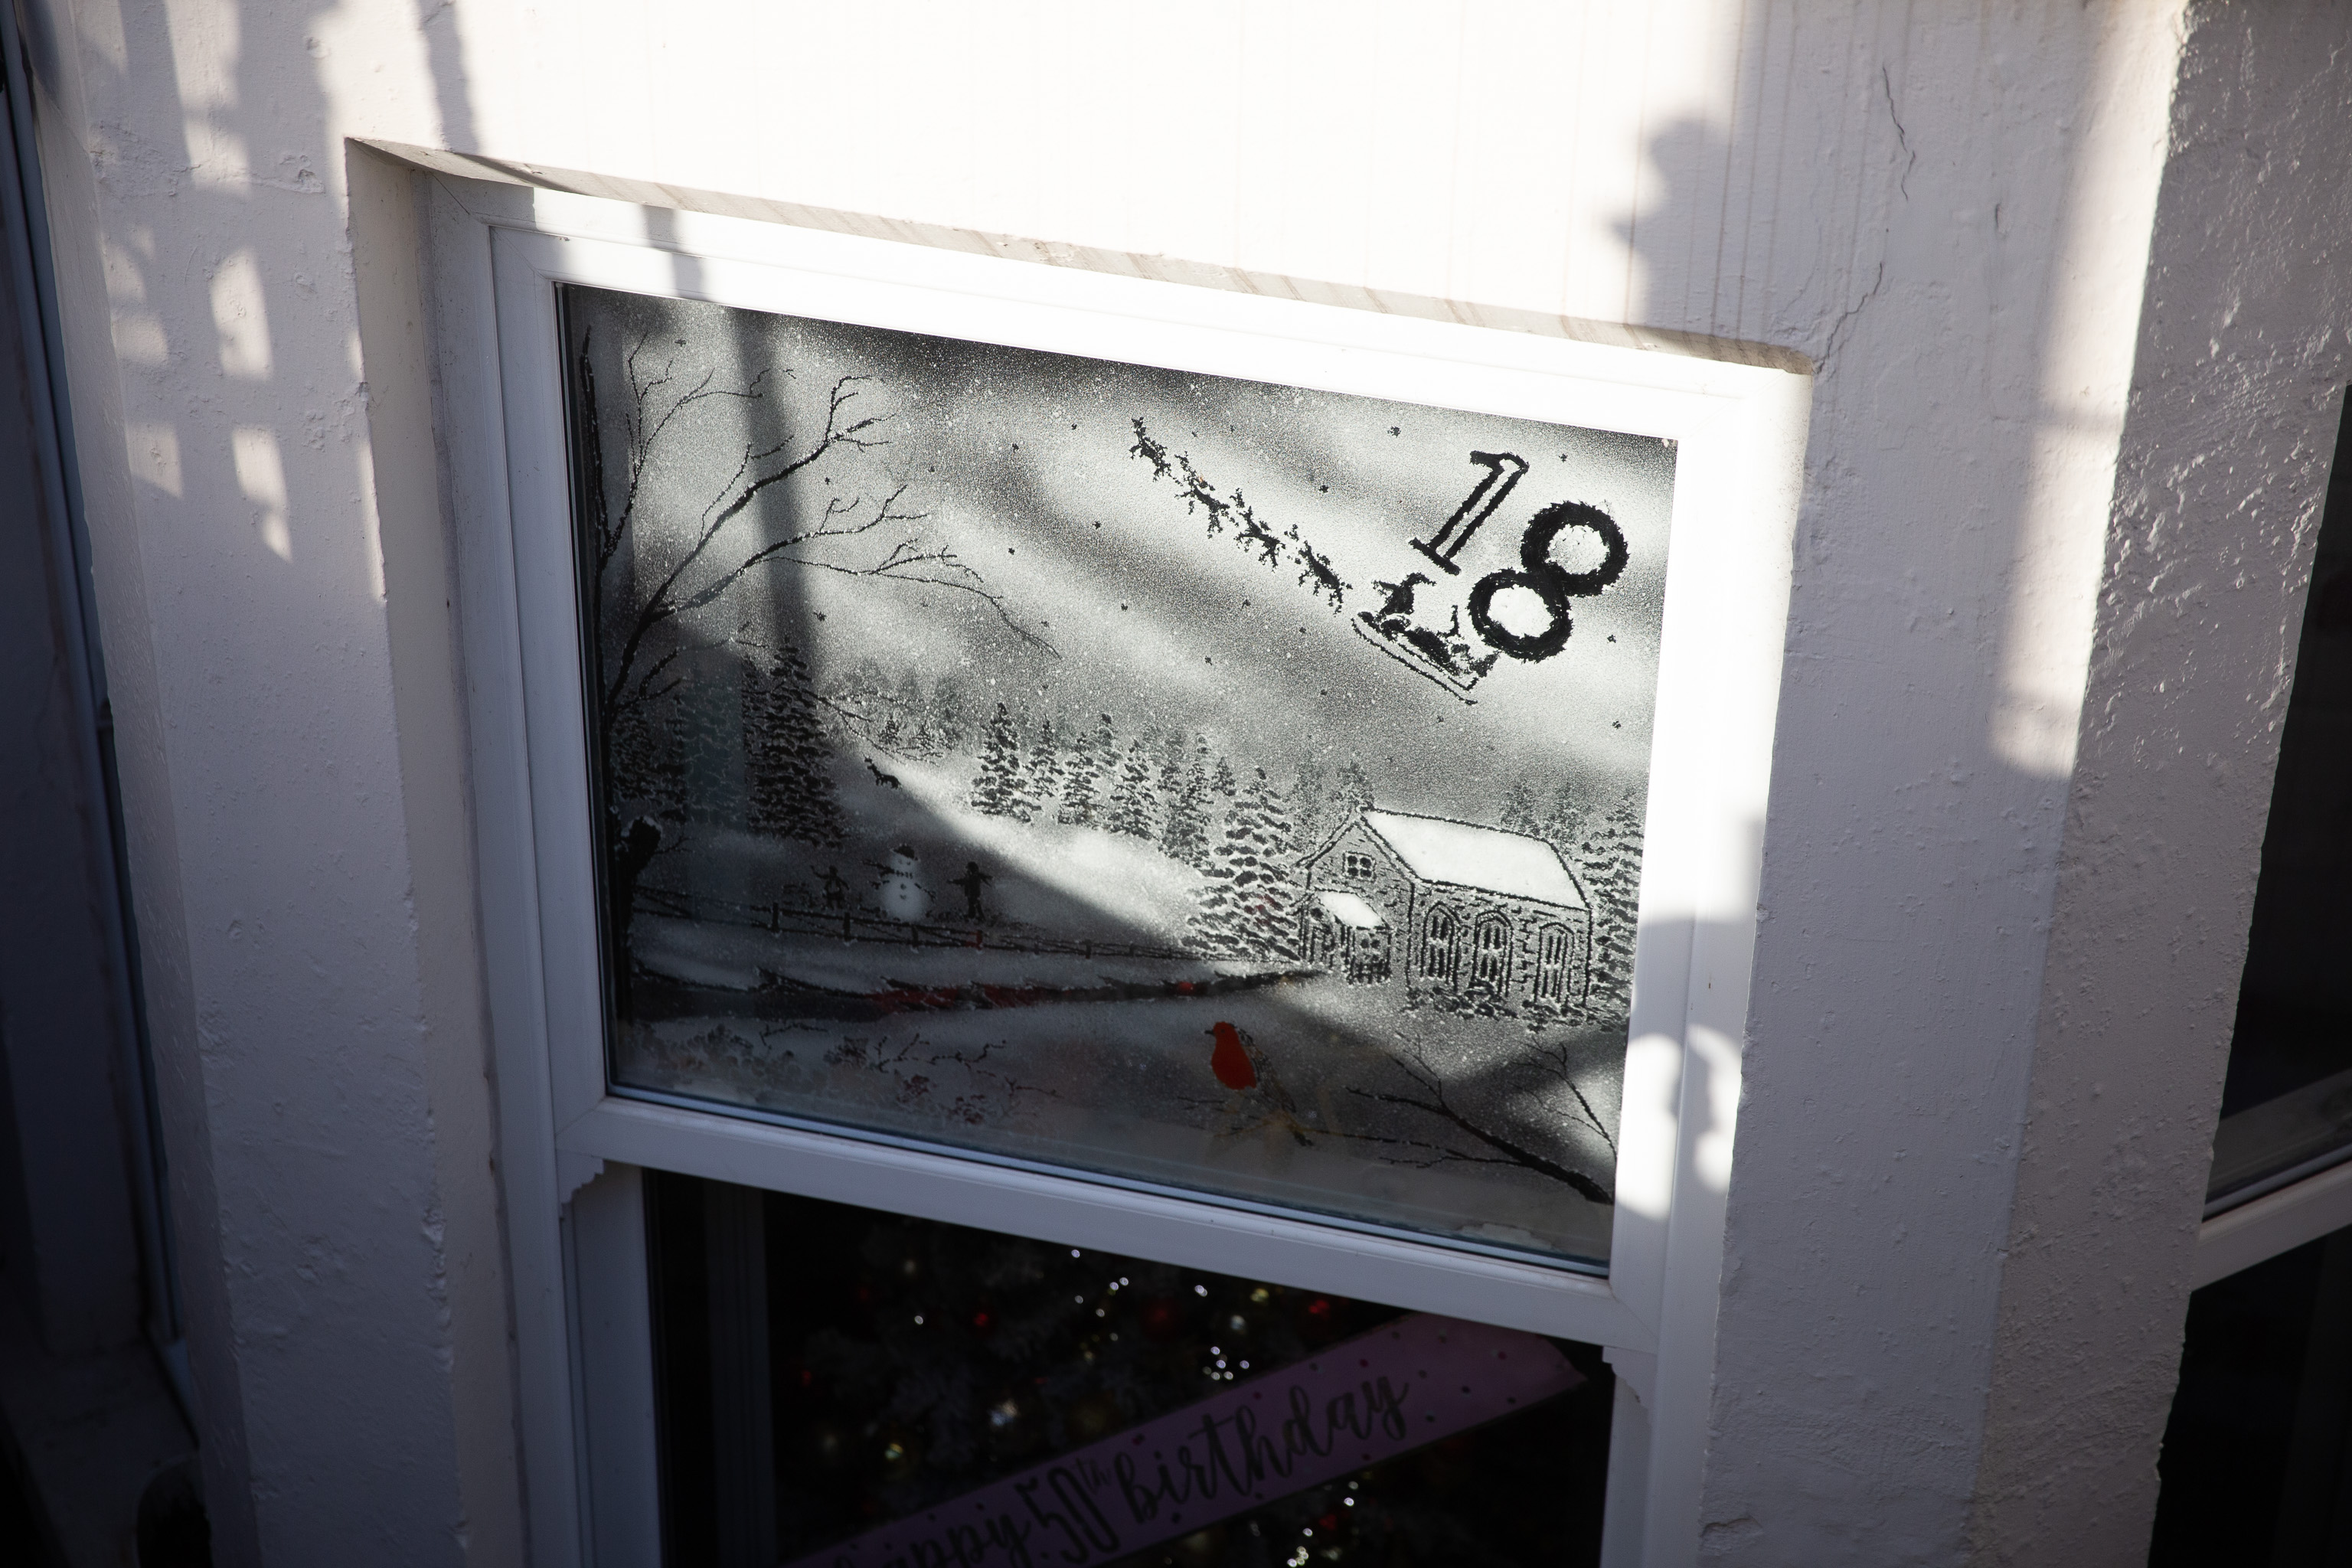 18
Excellent Christmas window art.
